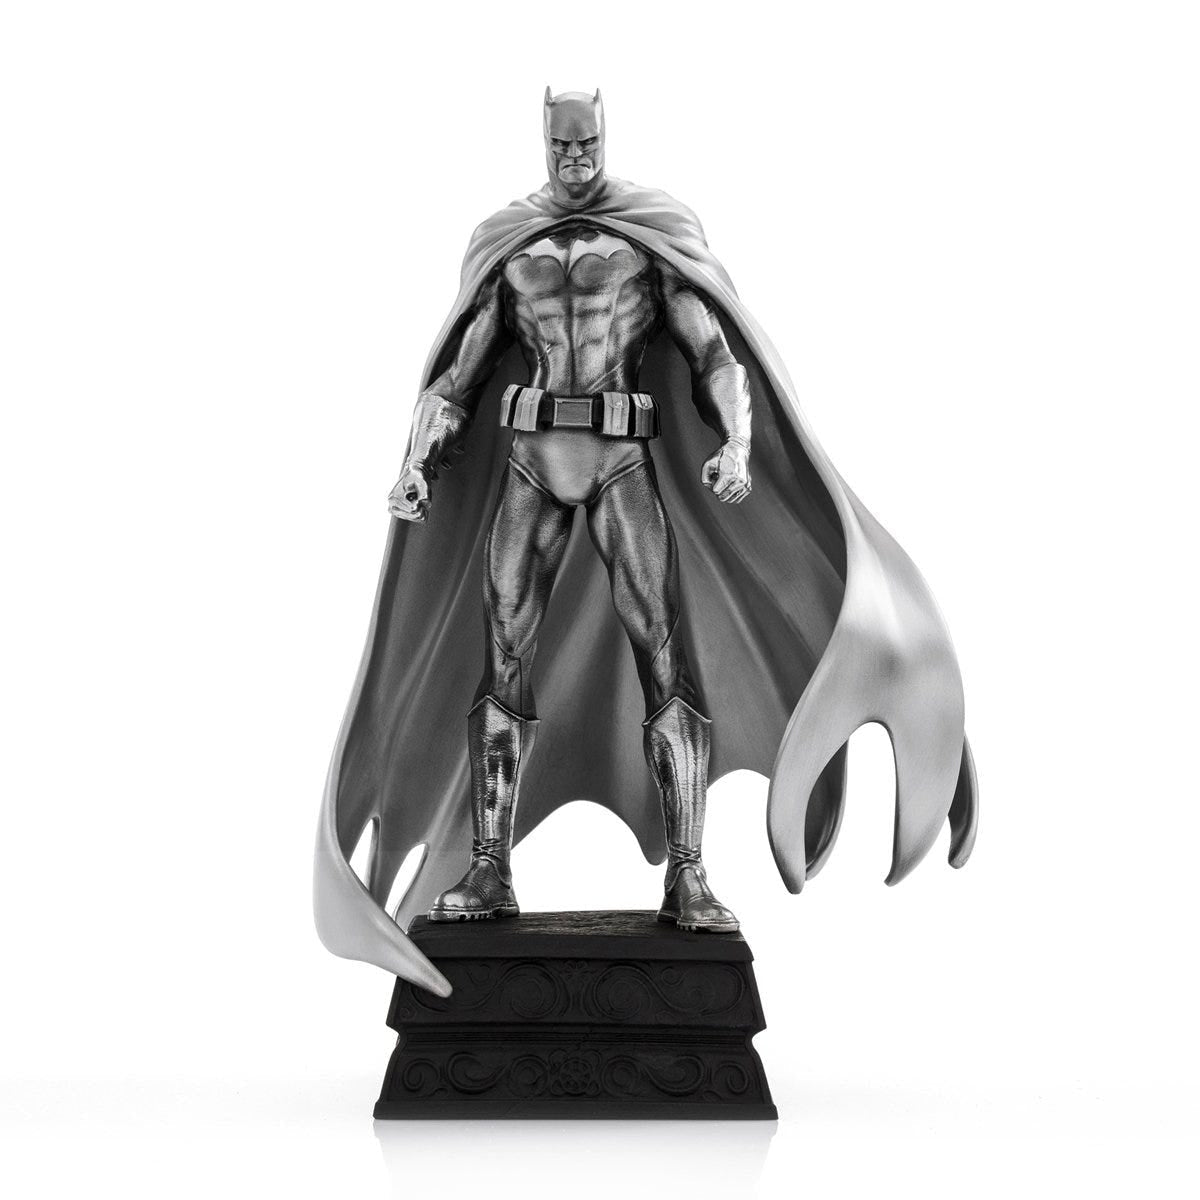 Royal Selangor DC Batman Resolute Figurine - Pewter - Notbrand